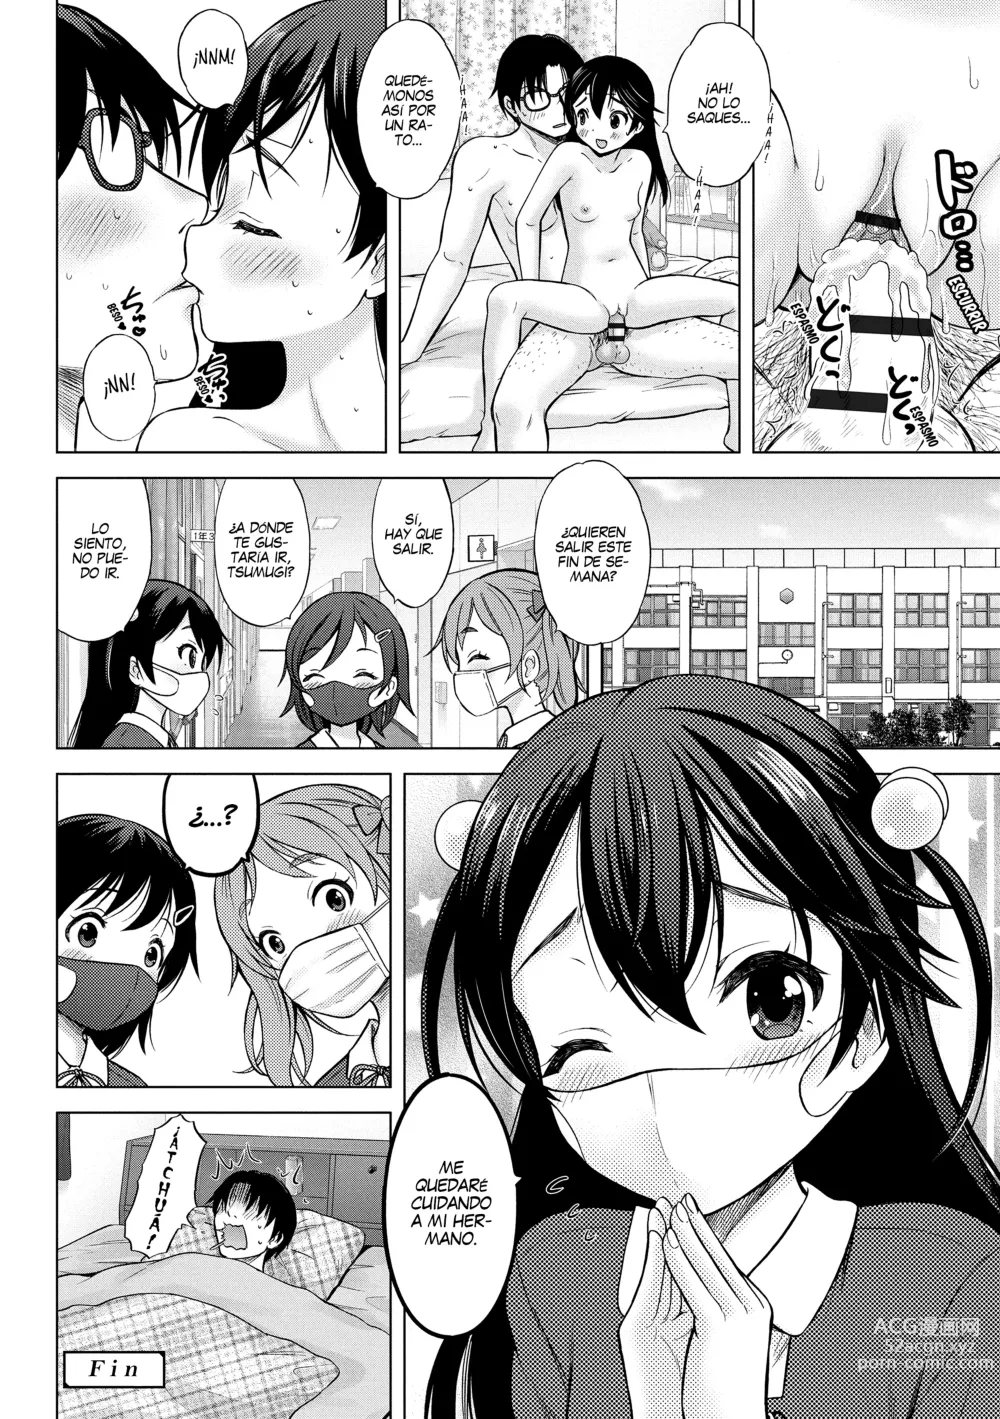 Page 26 of manga La calentura de mi hermana